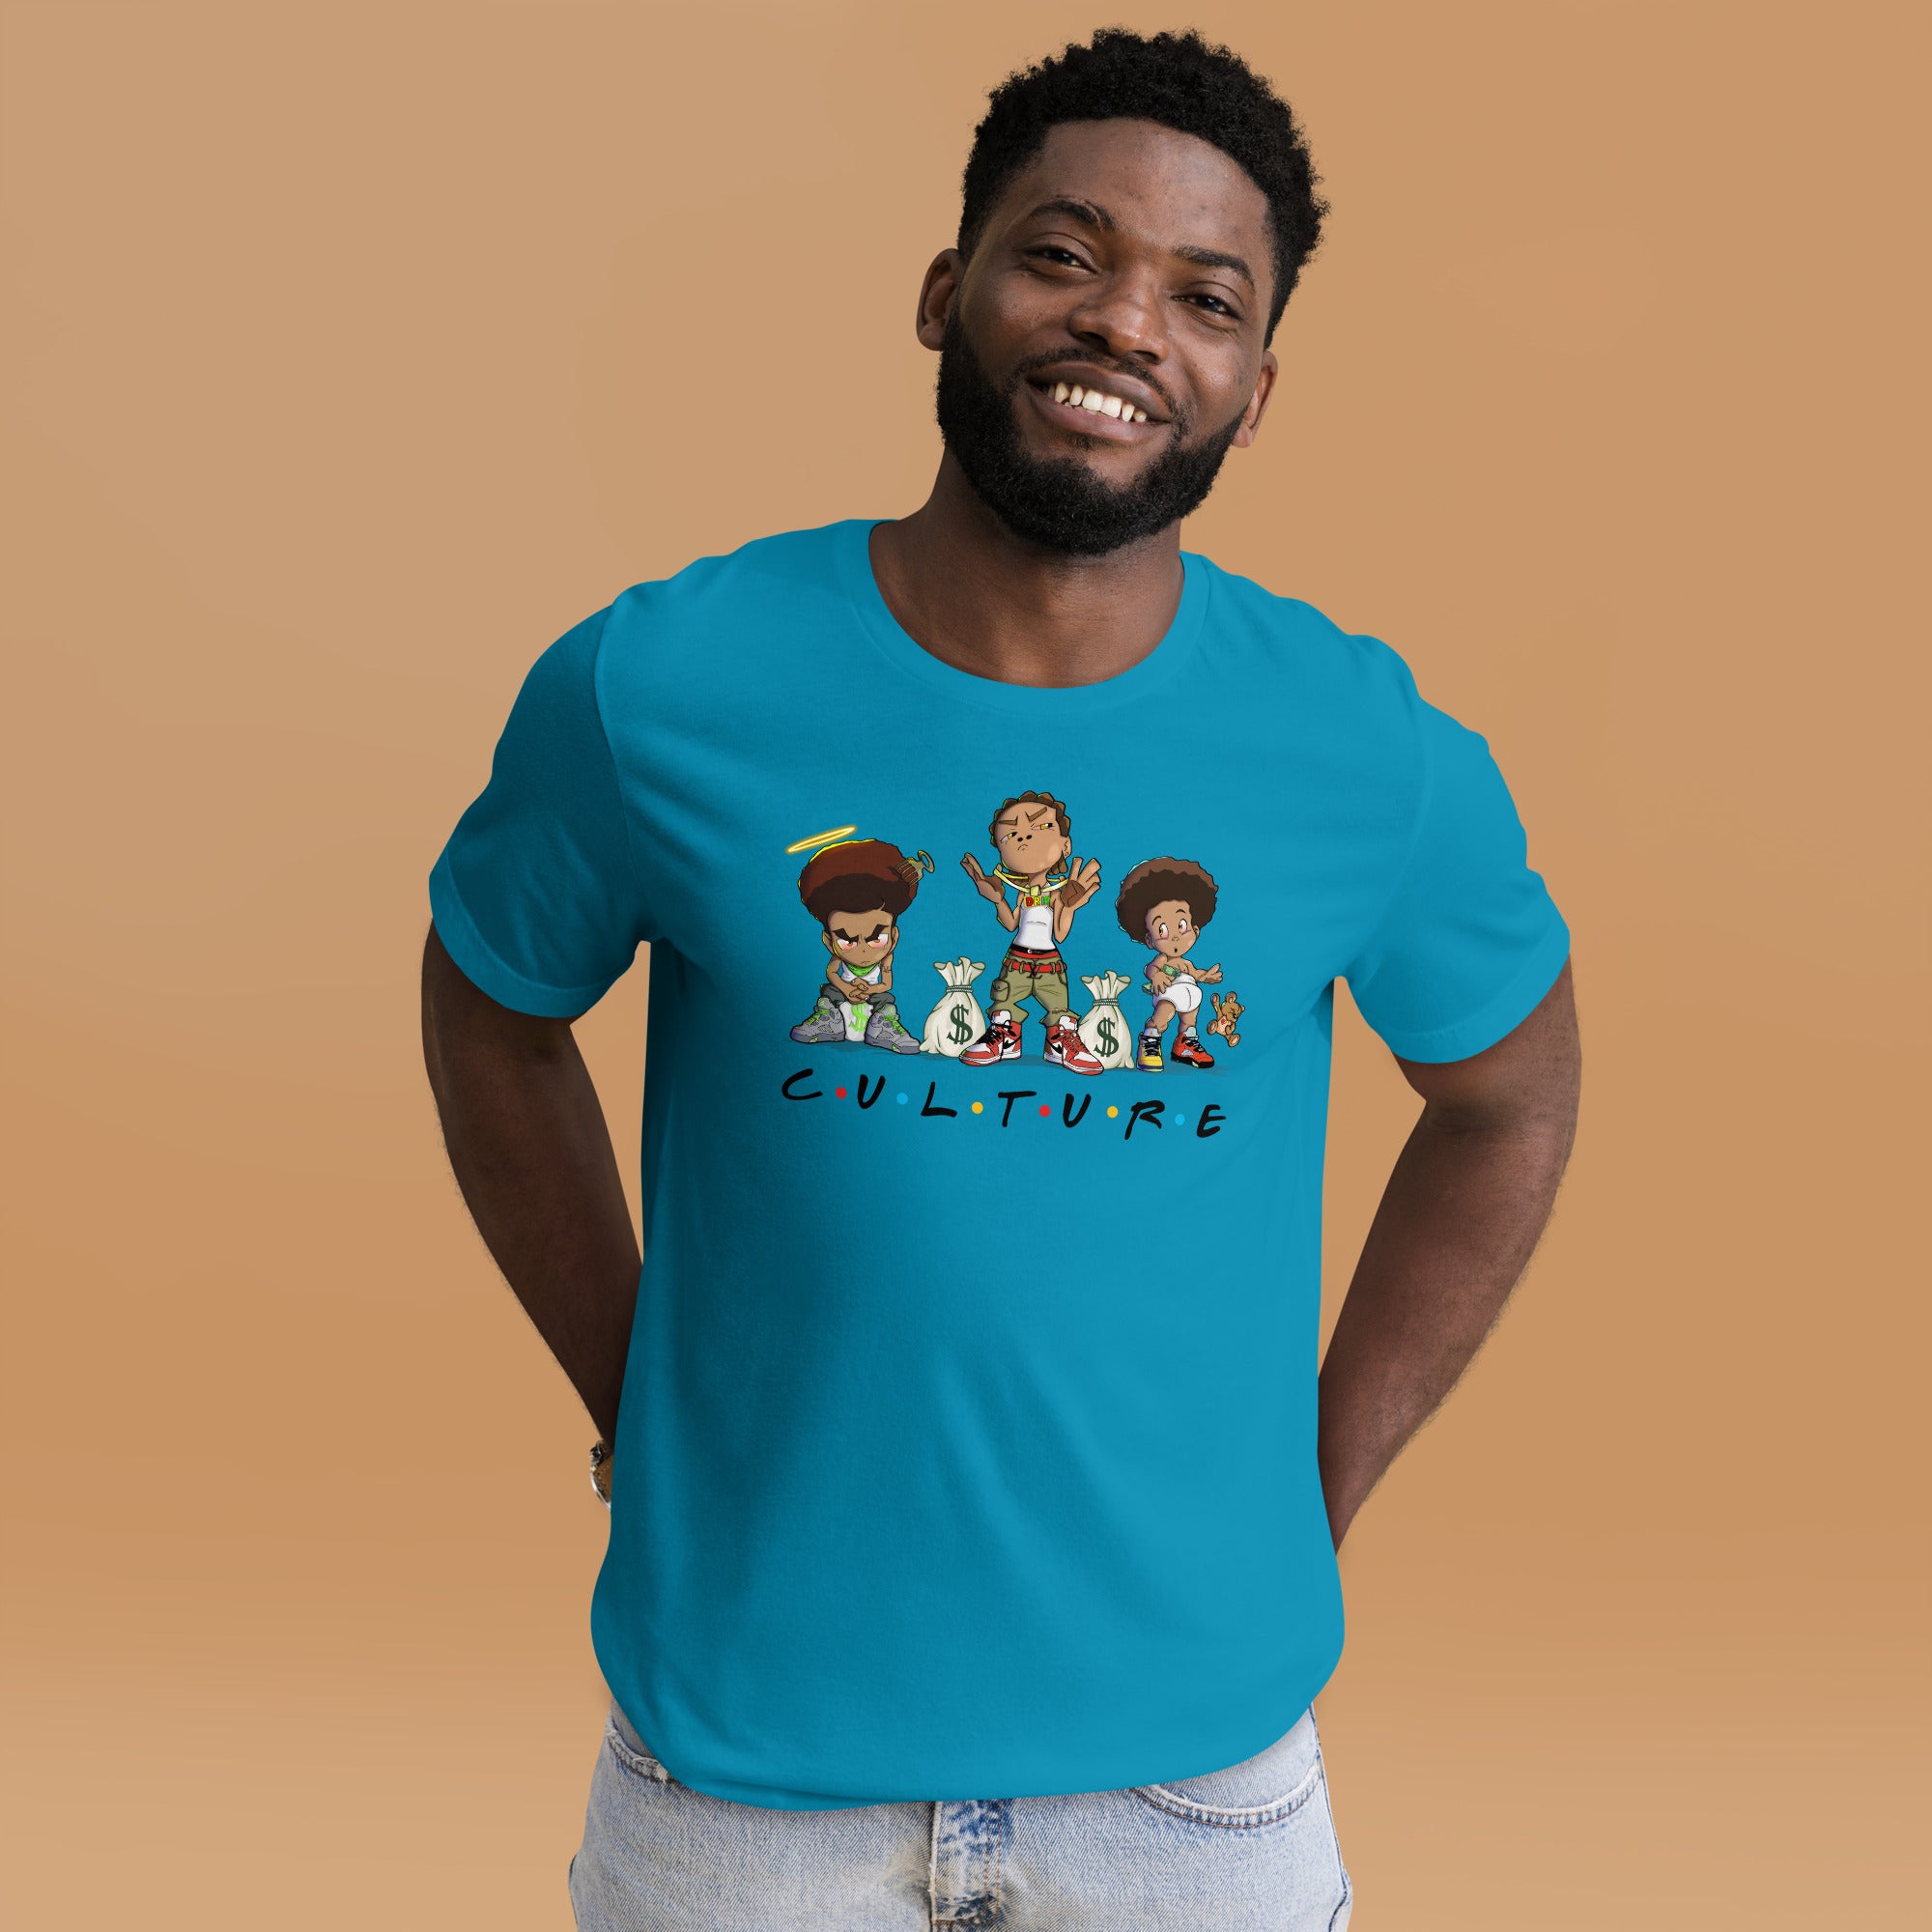 Men's Graphic Short-Sleeve t-shirt